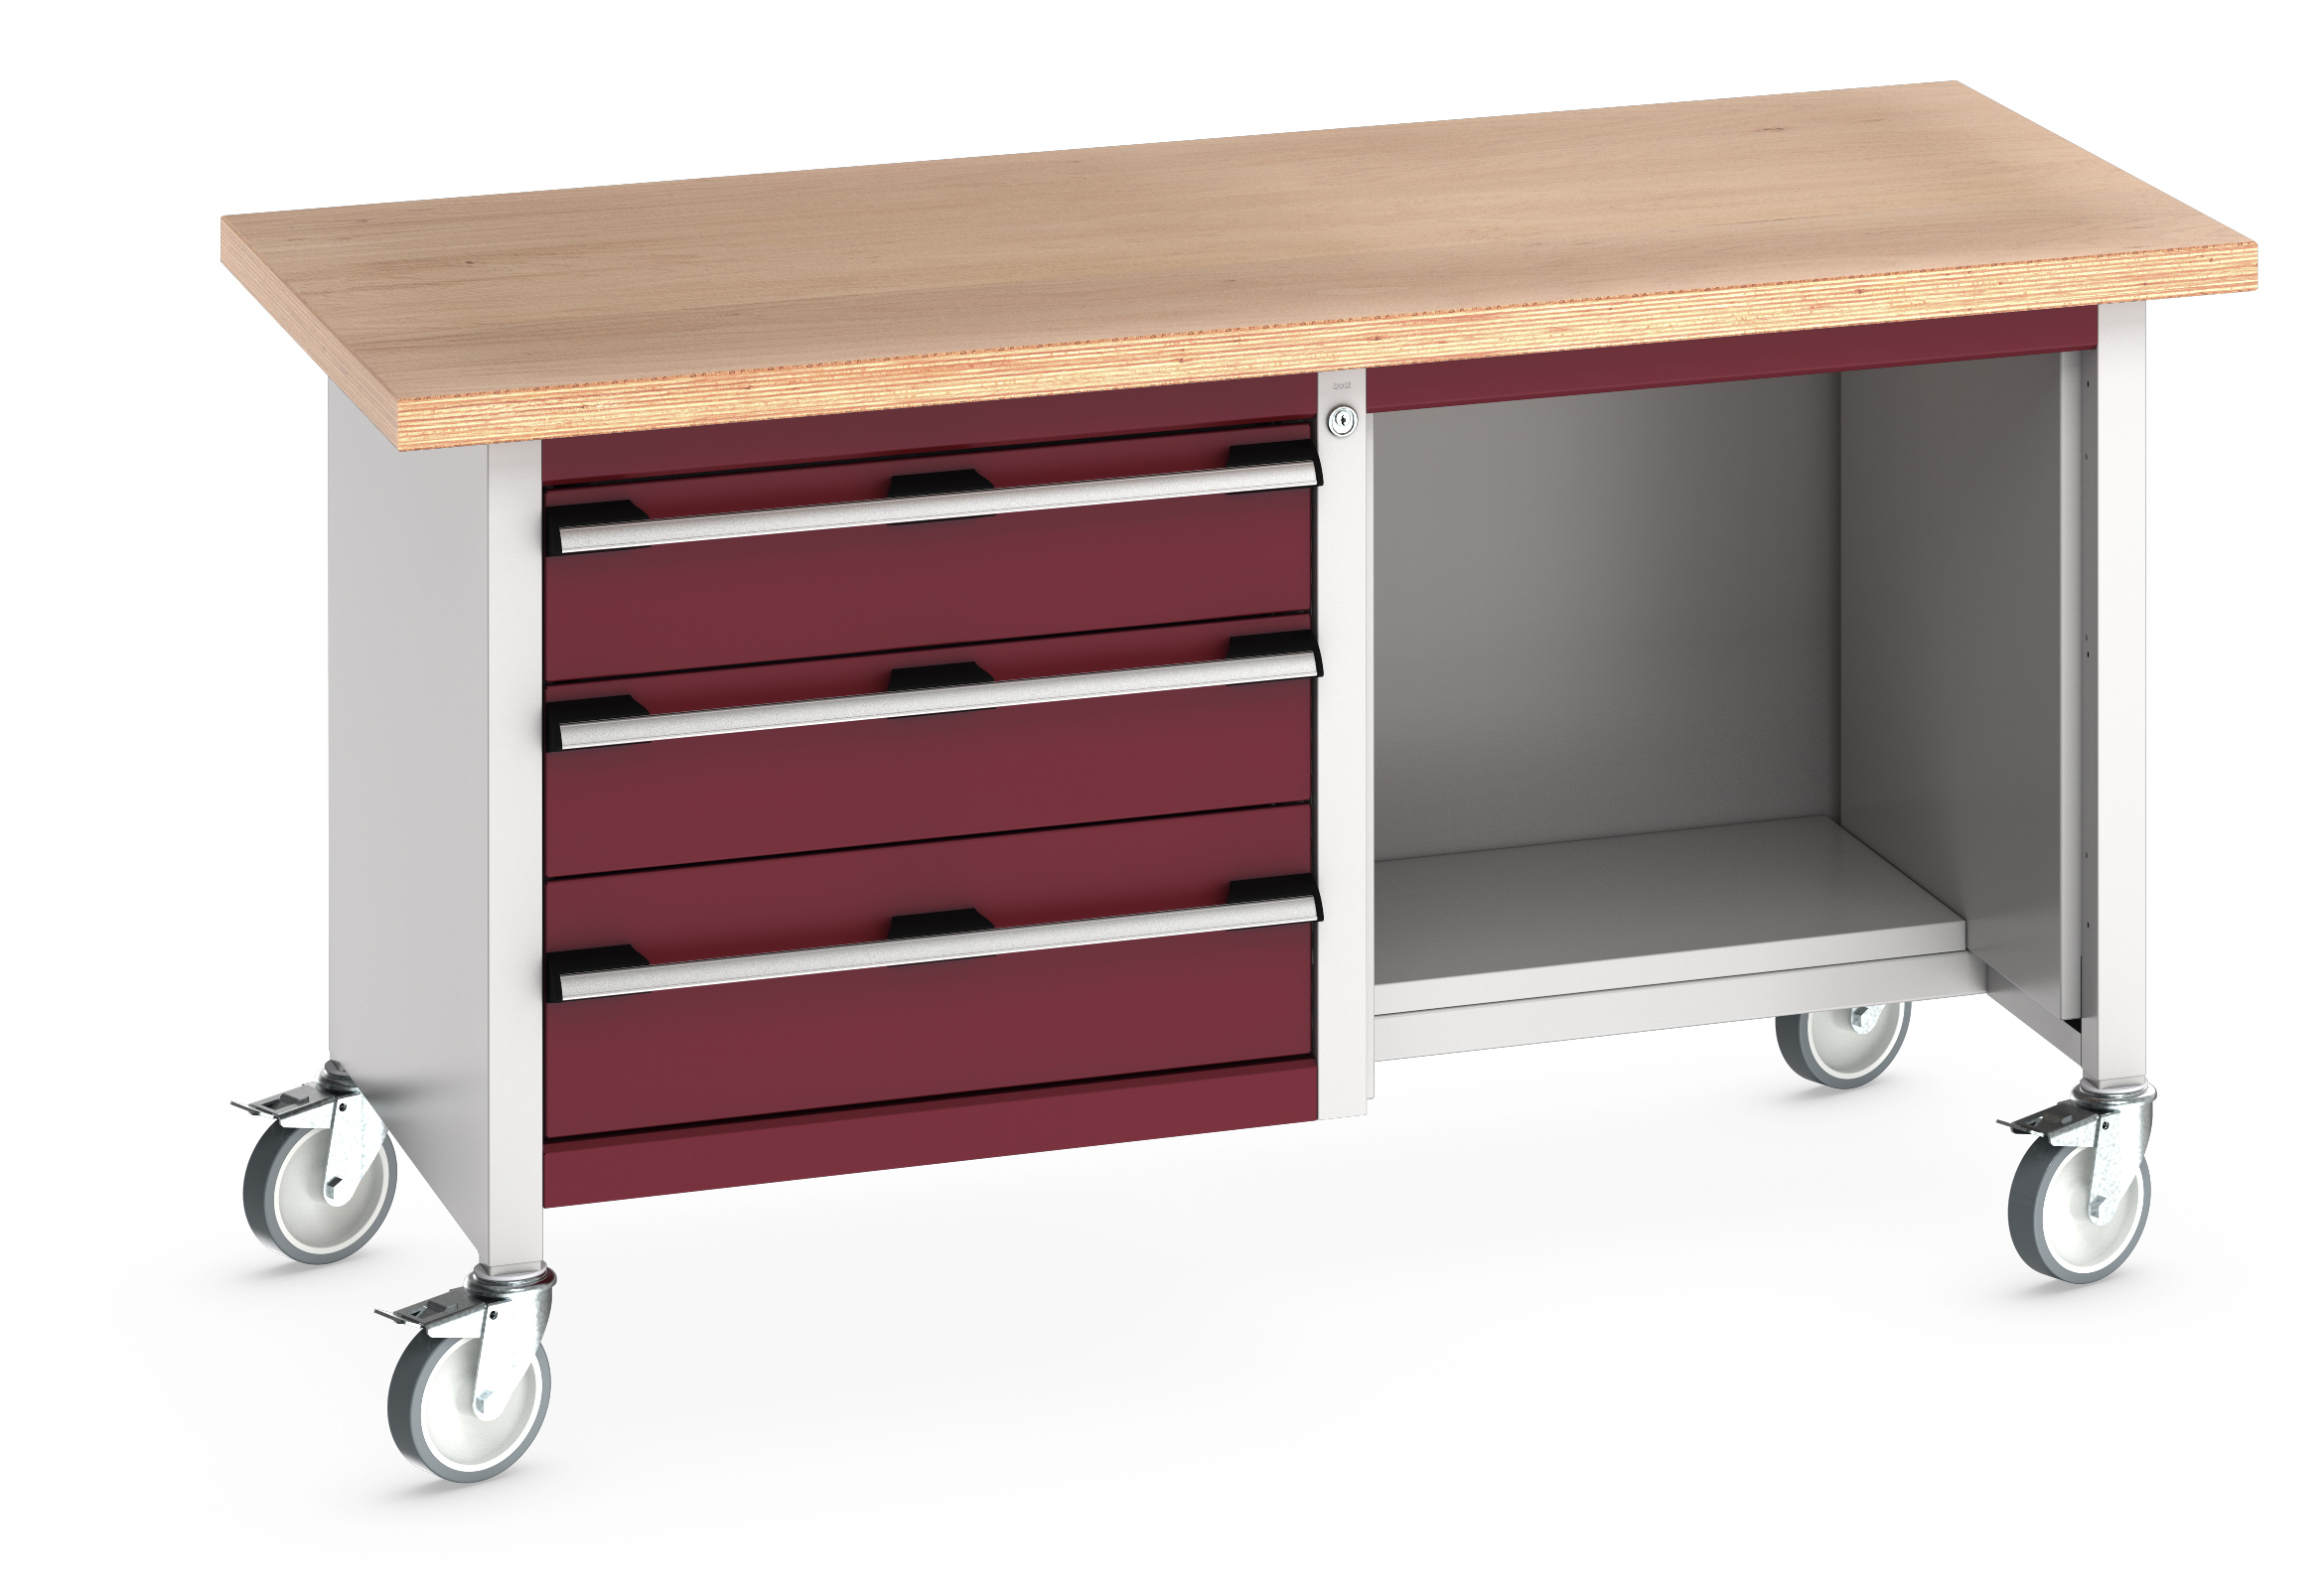 Bott Cubio Mobile Storage Bench With 3 Drawer Cabinet / Open With Half Depth Base Shelf - 41002115.24V